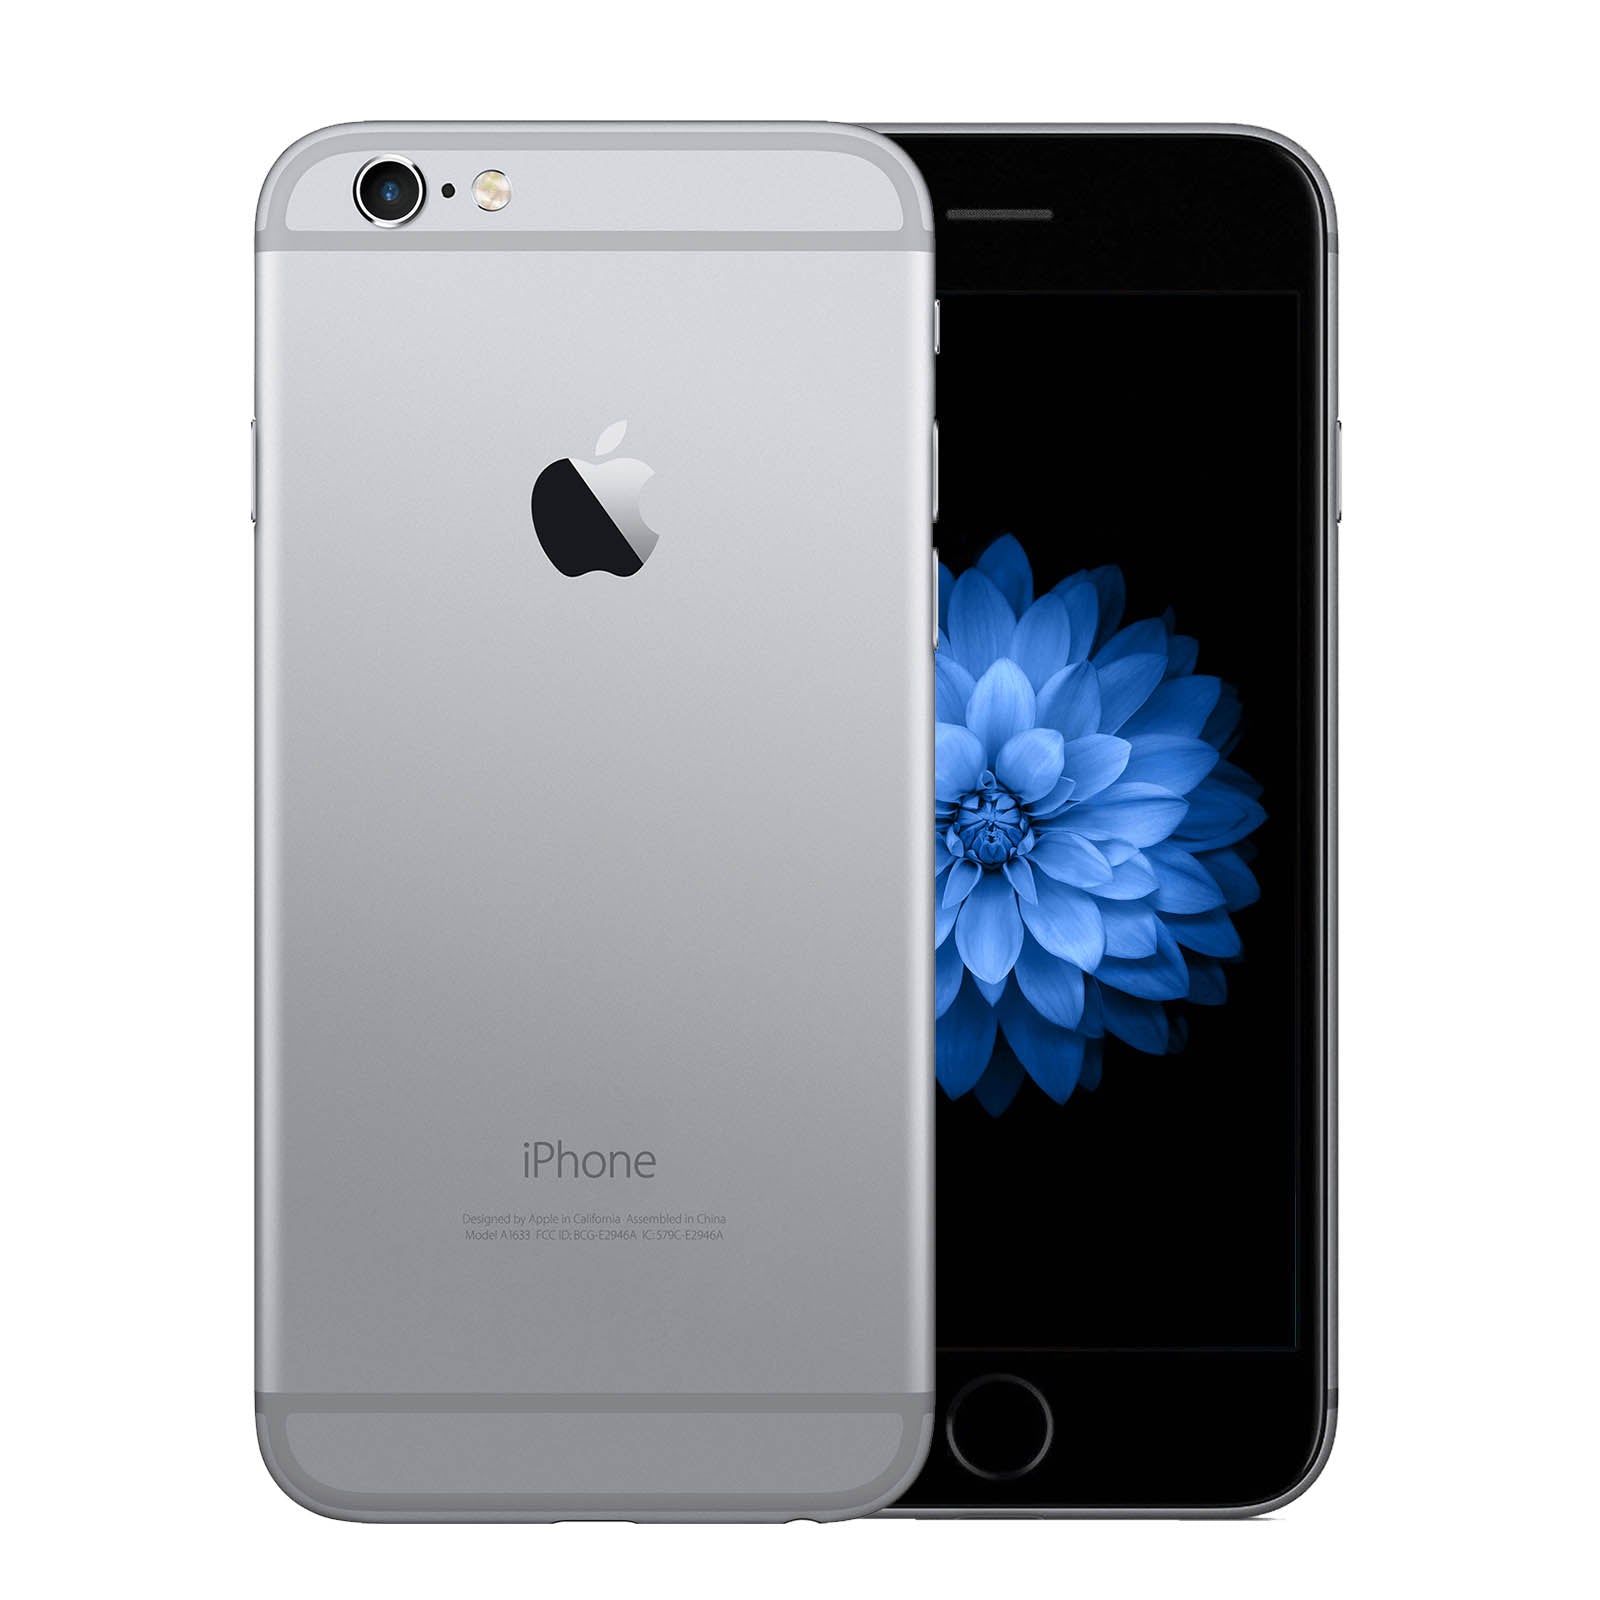 Apple iPhone 6 64GB Space Grey Very Good - Unlocked